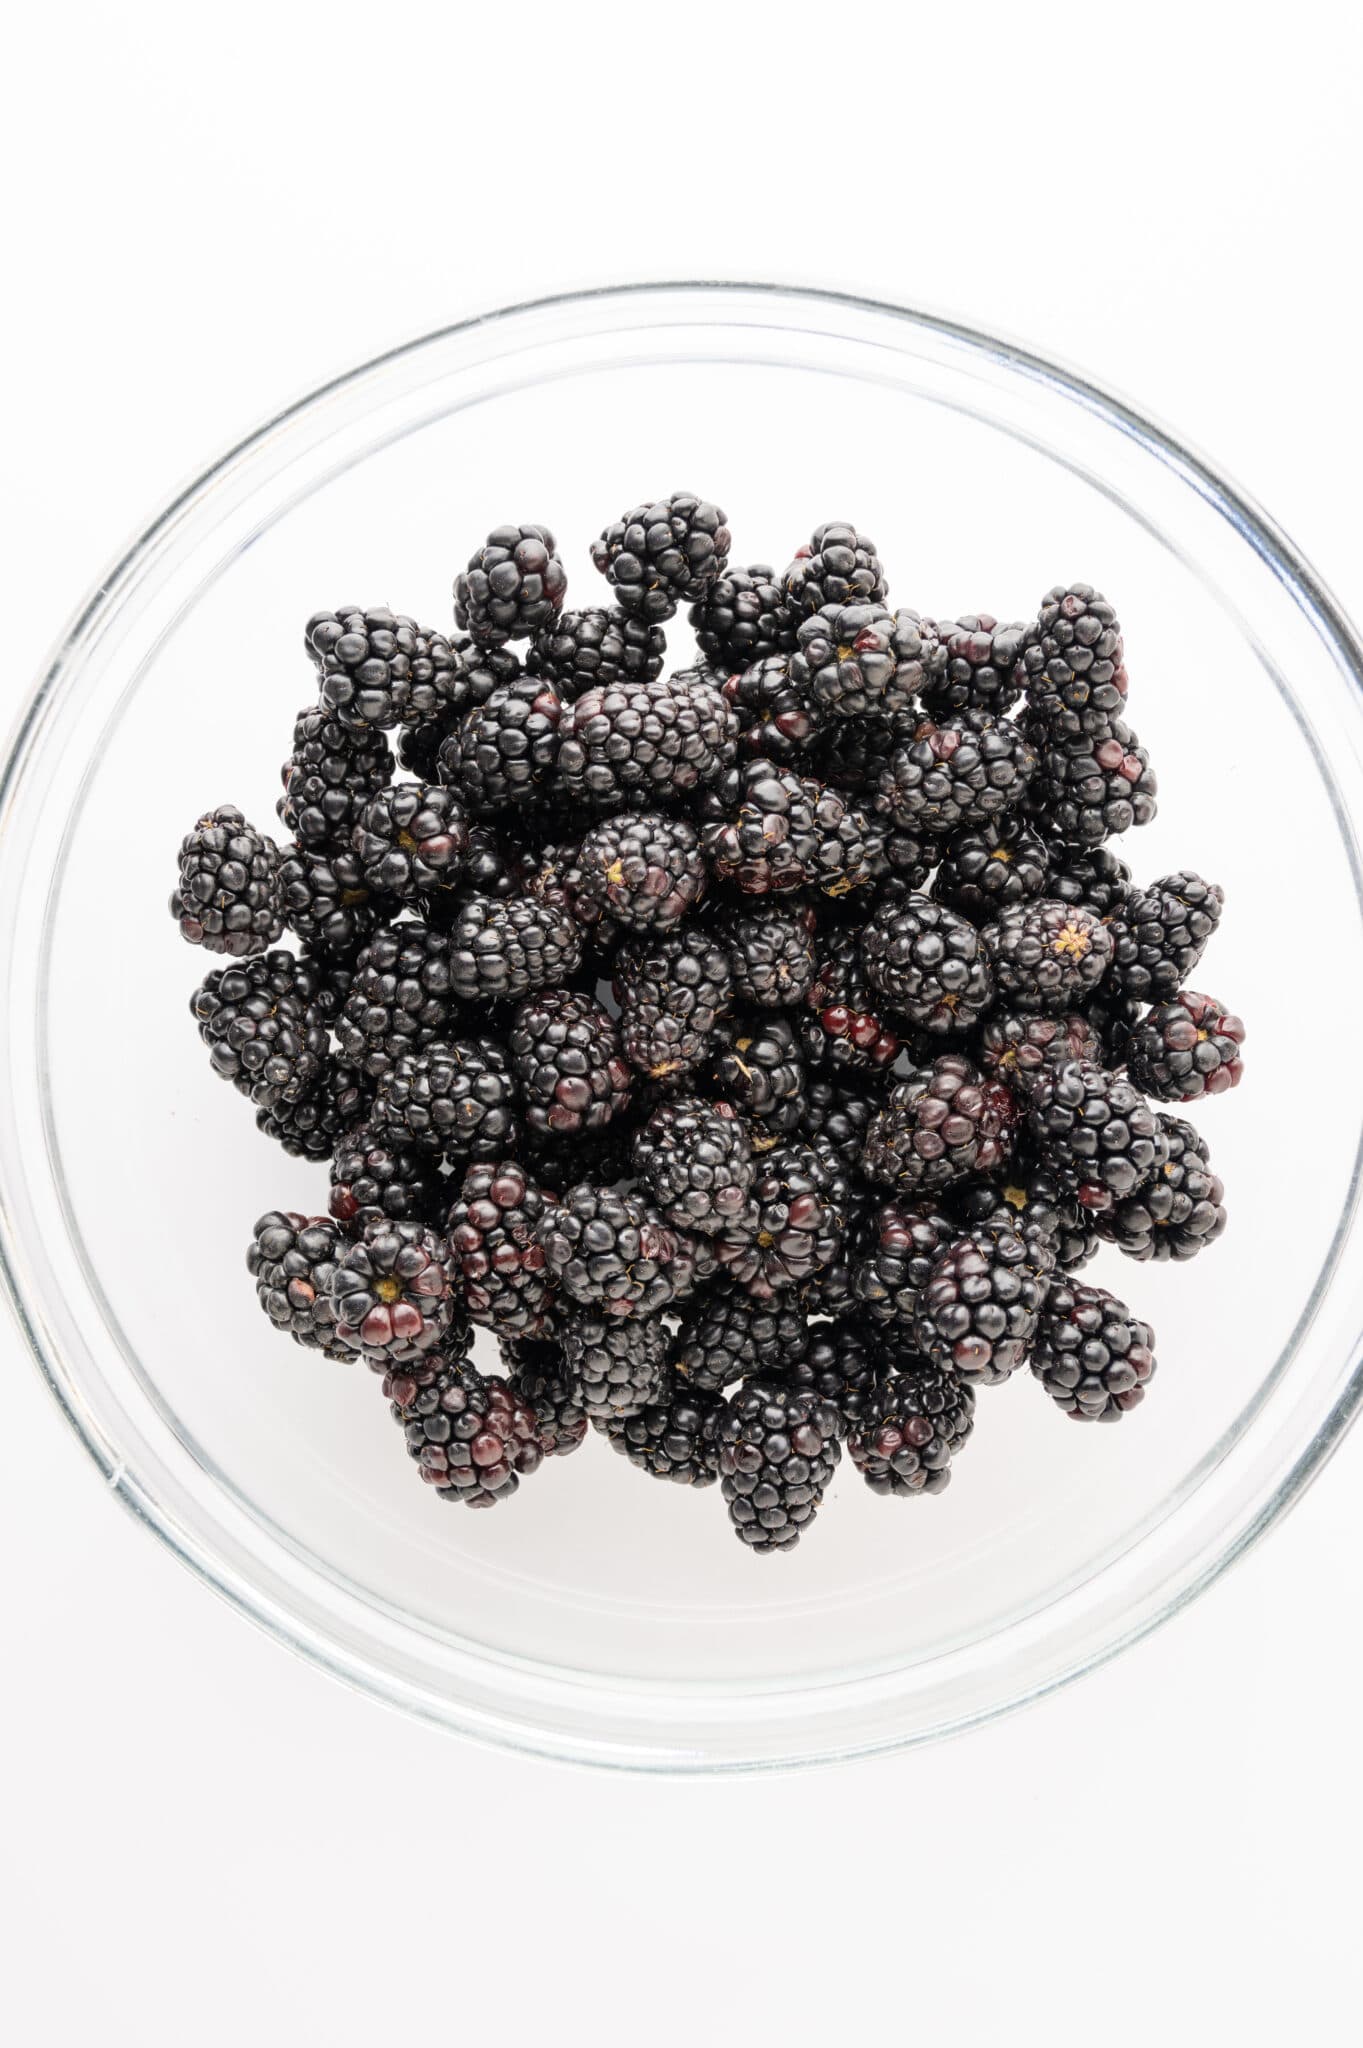 Bowl of fresh ripe blackberries against a bright white background.